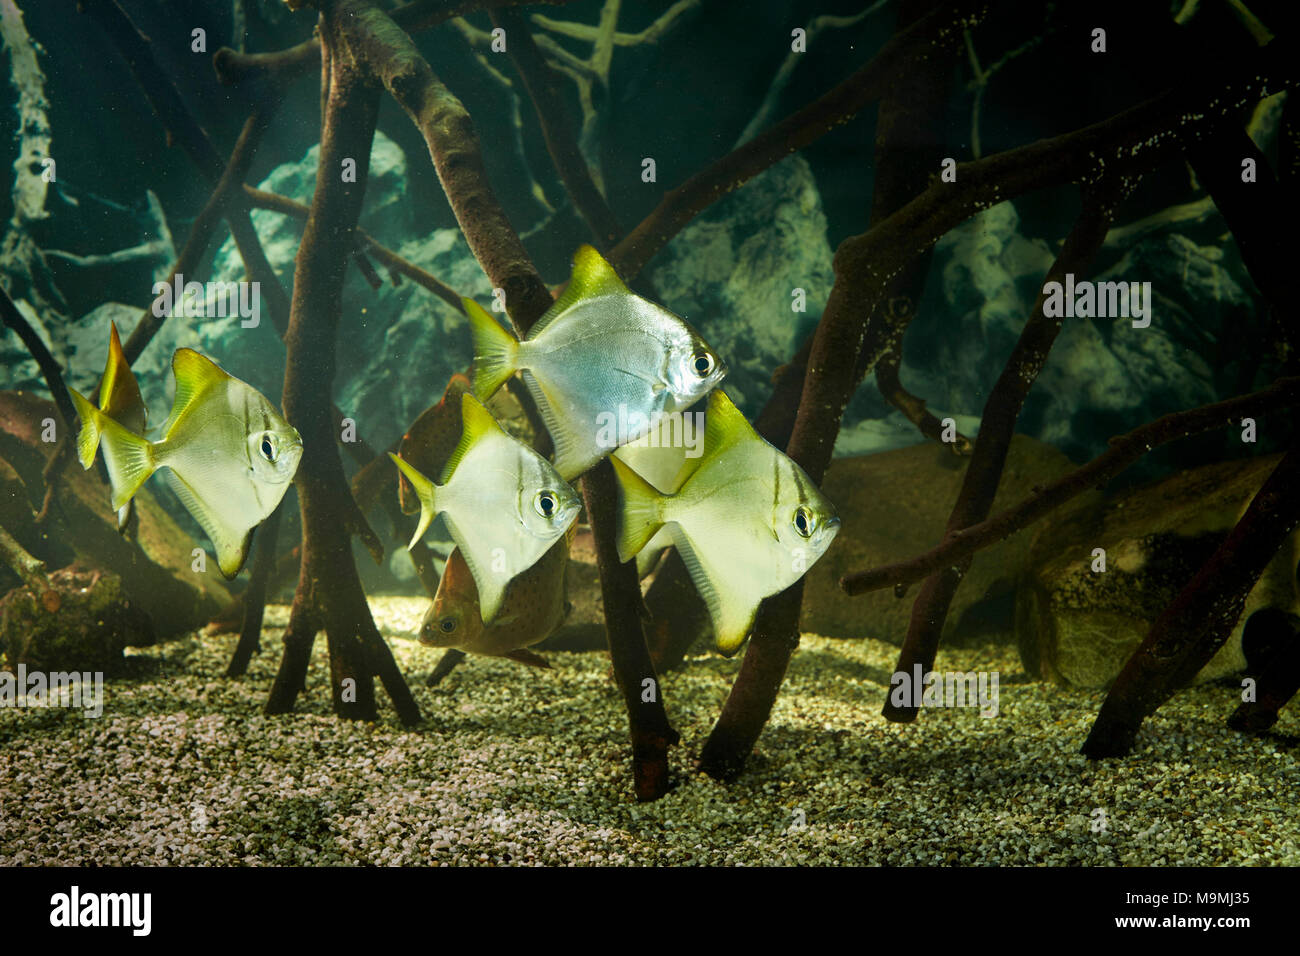 Silver Moonyfish (Monodactylus argenteus). Swarm in a brackish aquarium. Germany Stock Photo